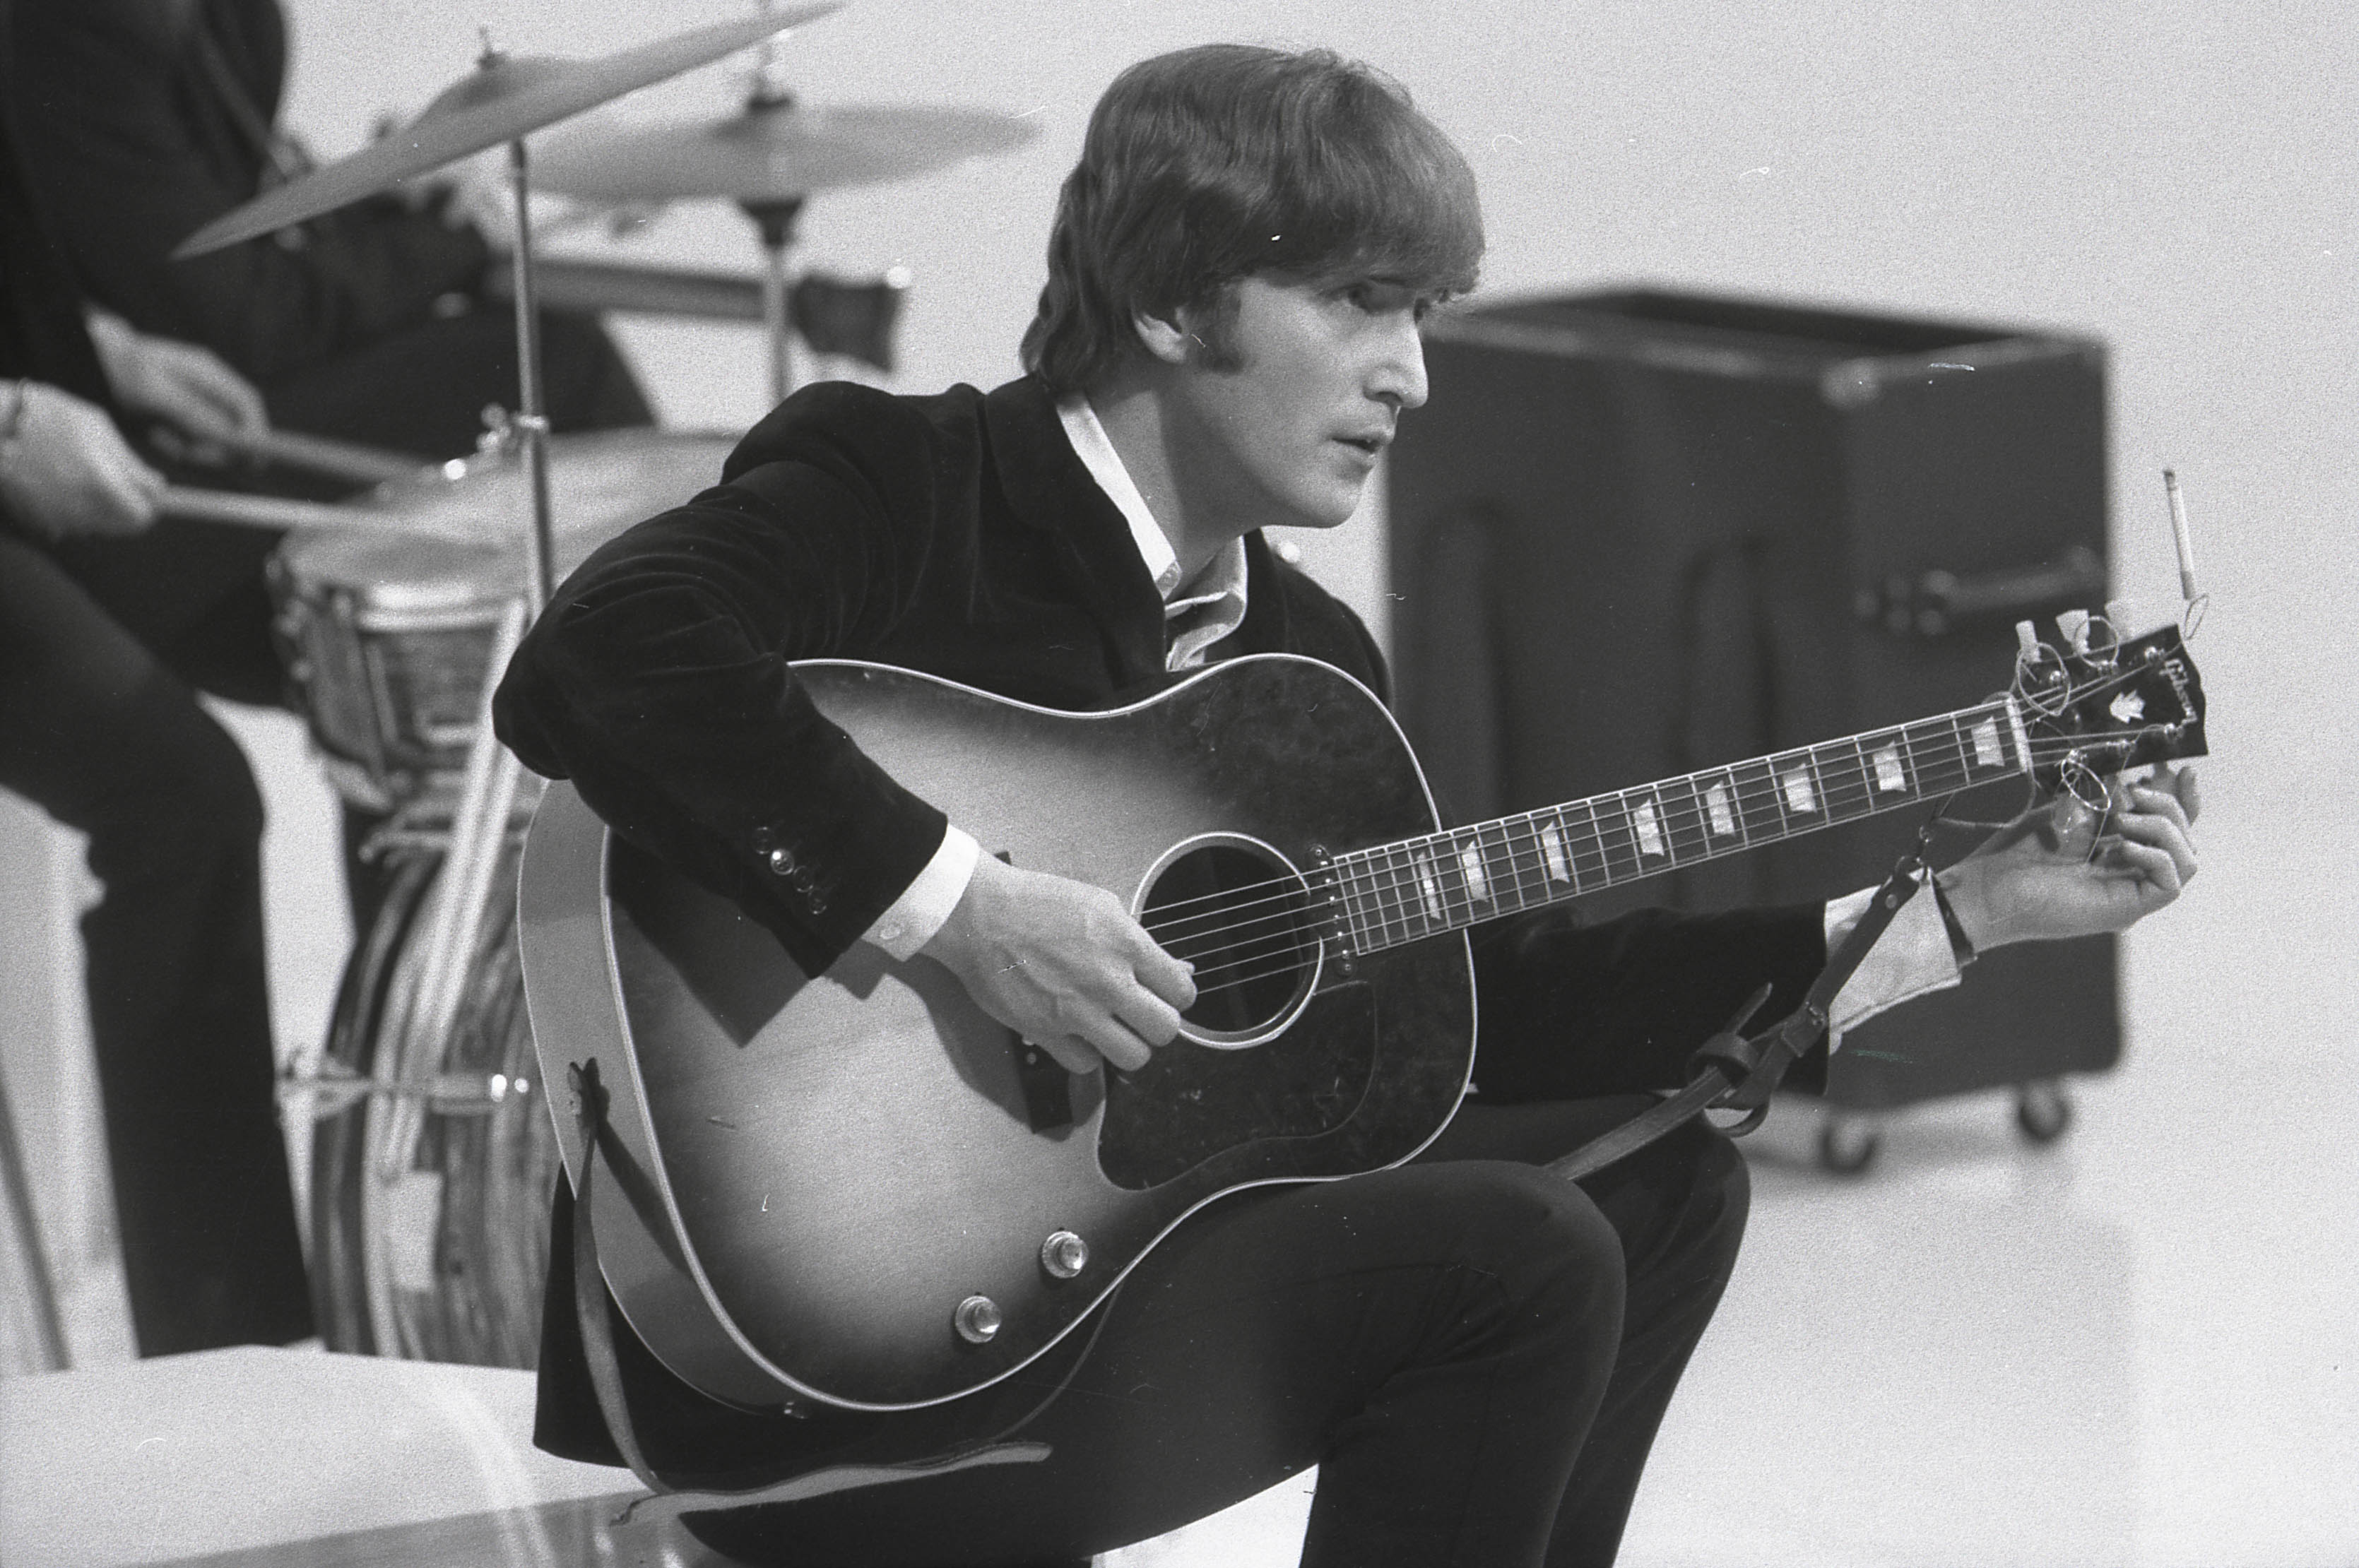 The Beatles' John Lennon strumming his guitar while sitting down